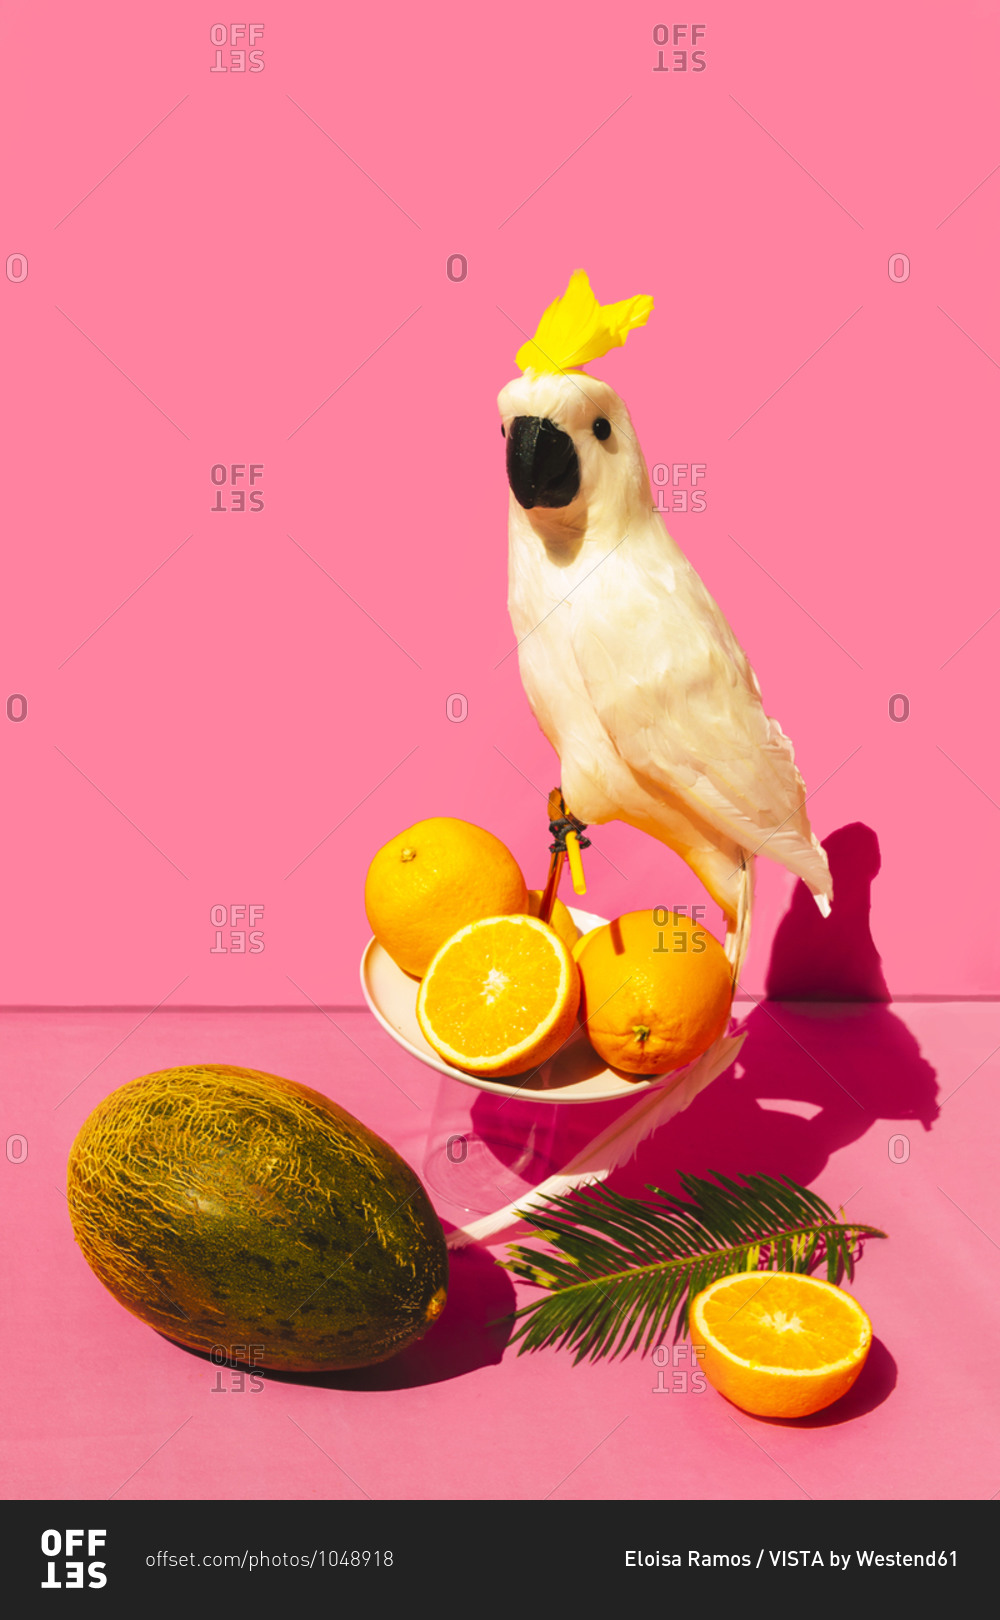 Funny parrot sitting on orange fruit against pink background